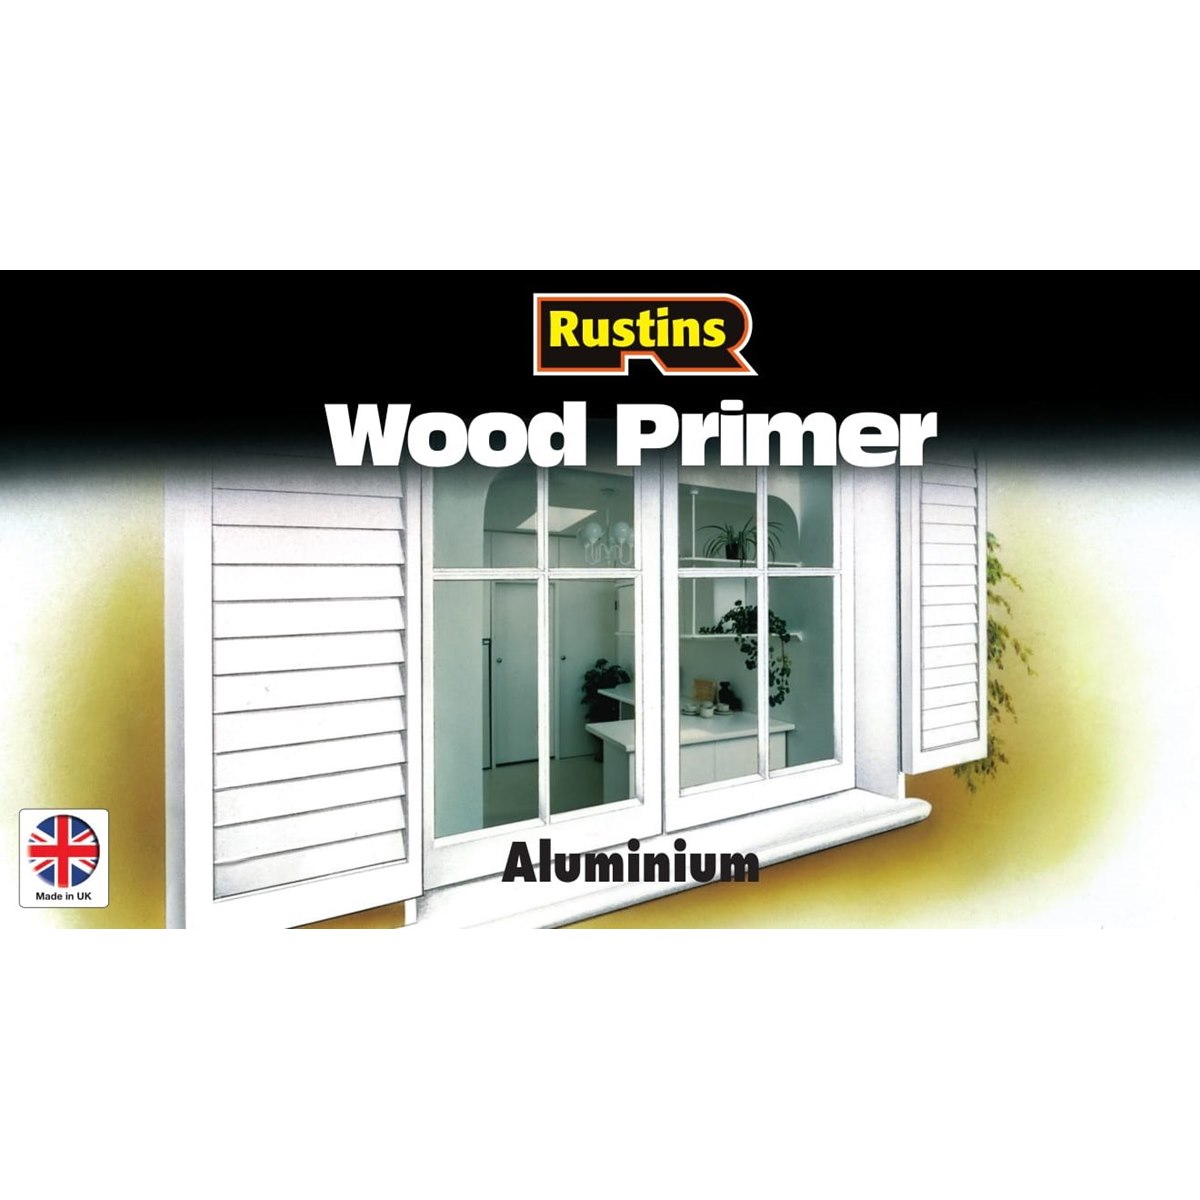 Where to Buy Rustins Aluminium Wood Primer